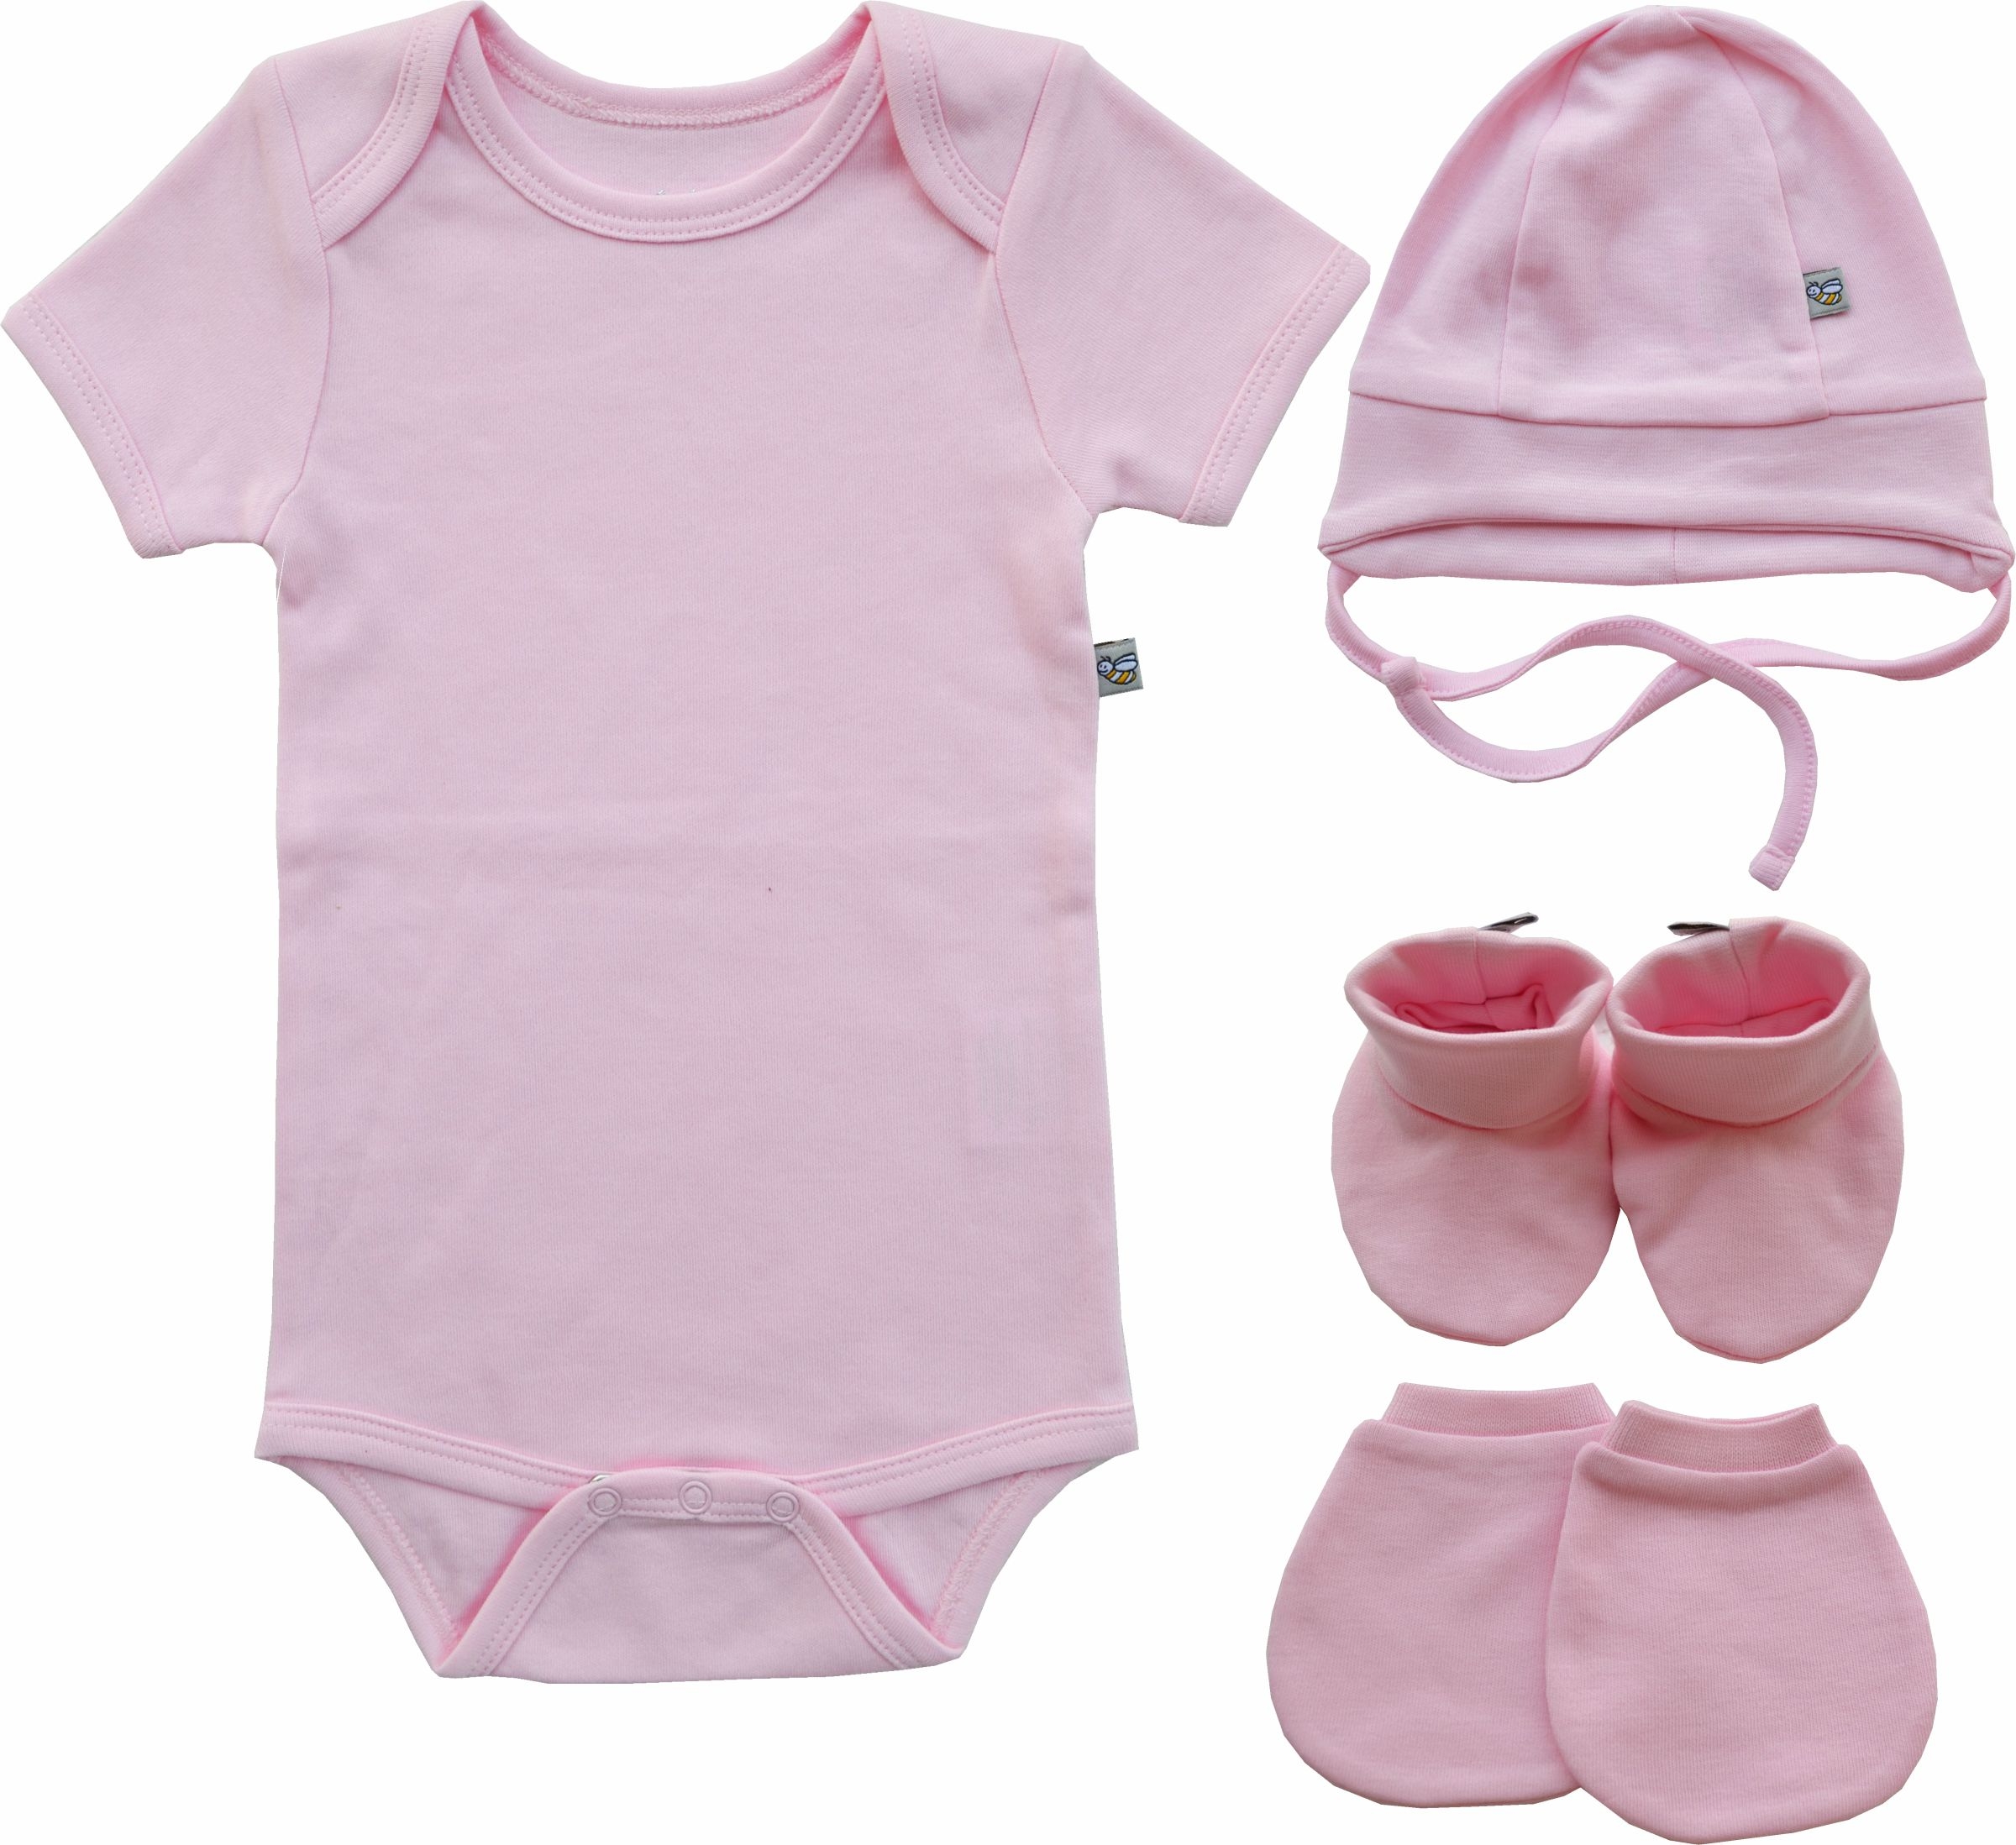 Pink Baby Romper/Onesie+Pink Cap+Pink Mitten bootie set (100% Cotton)